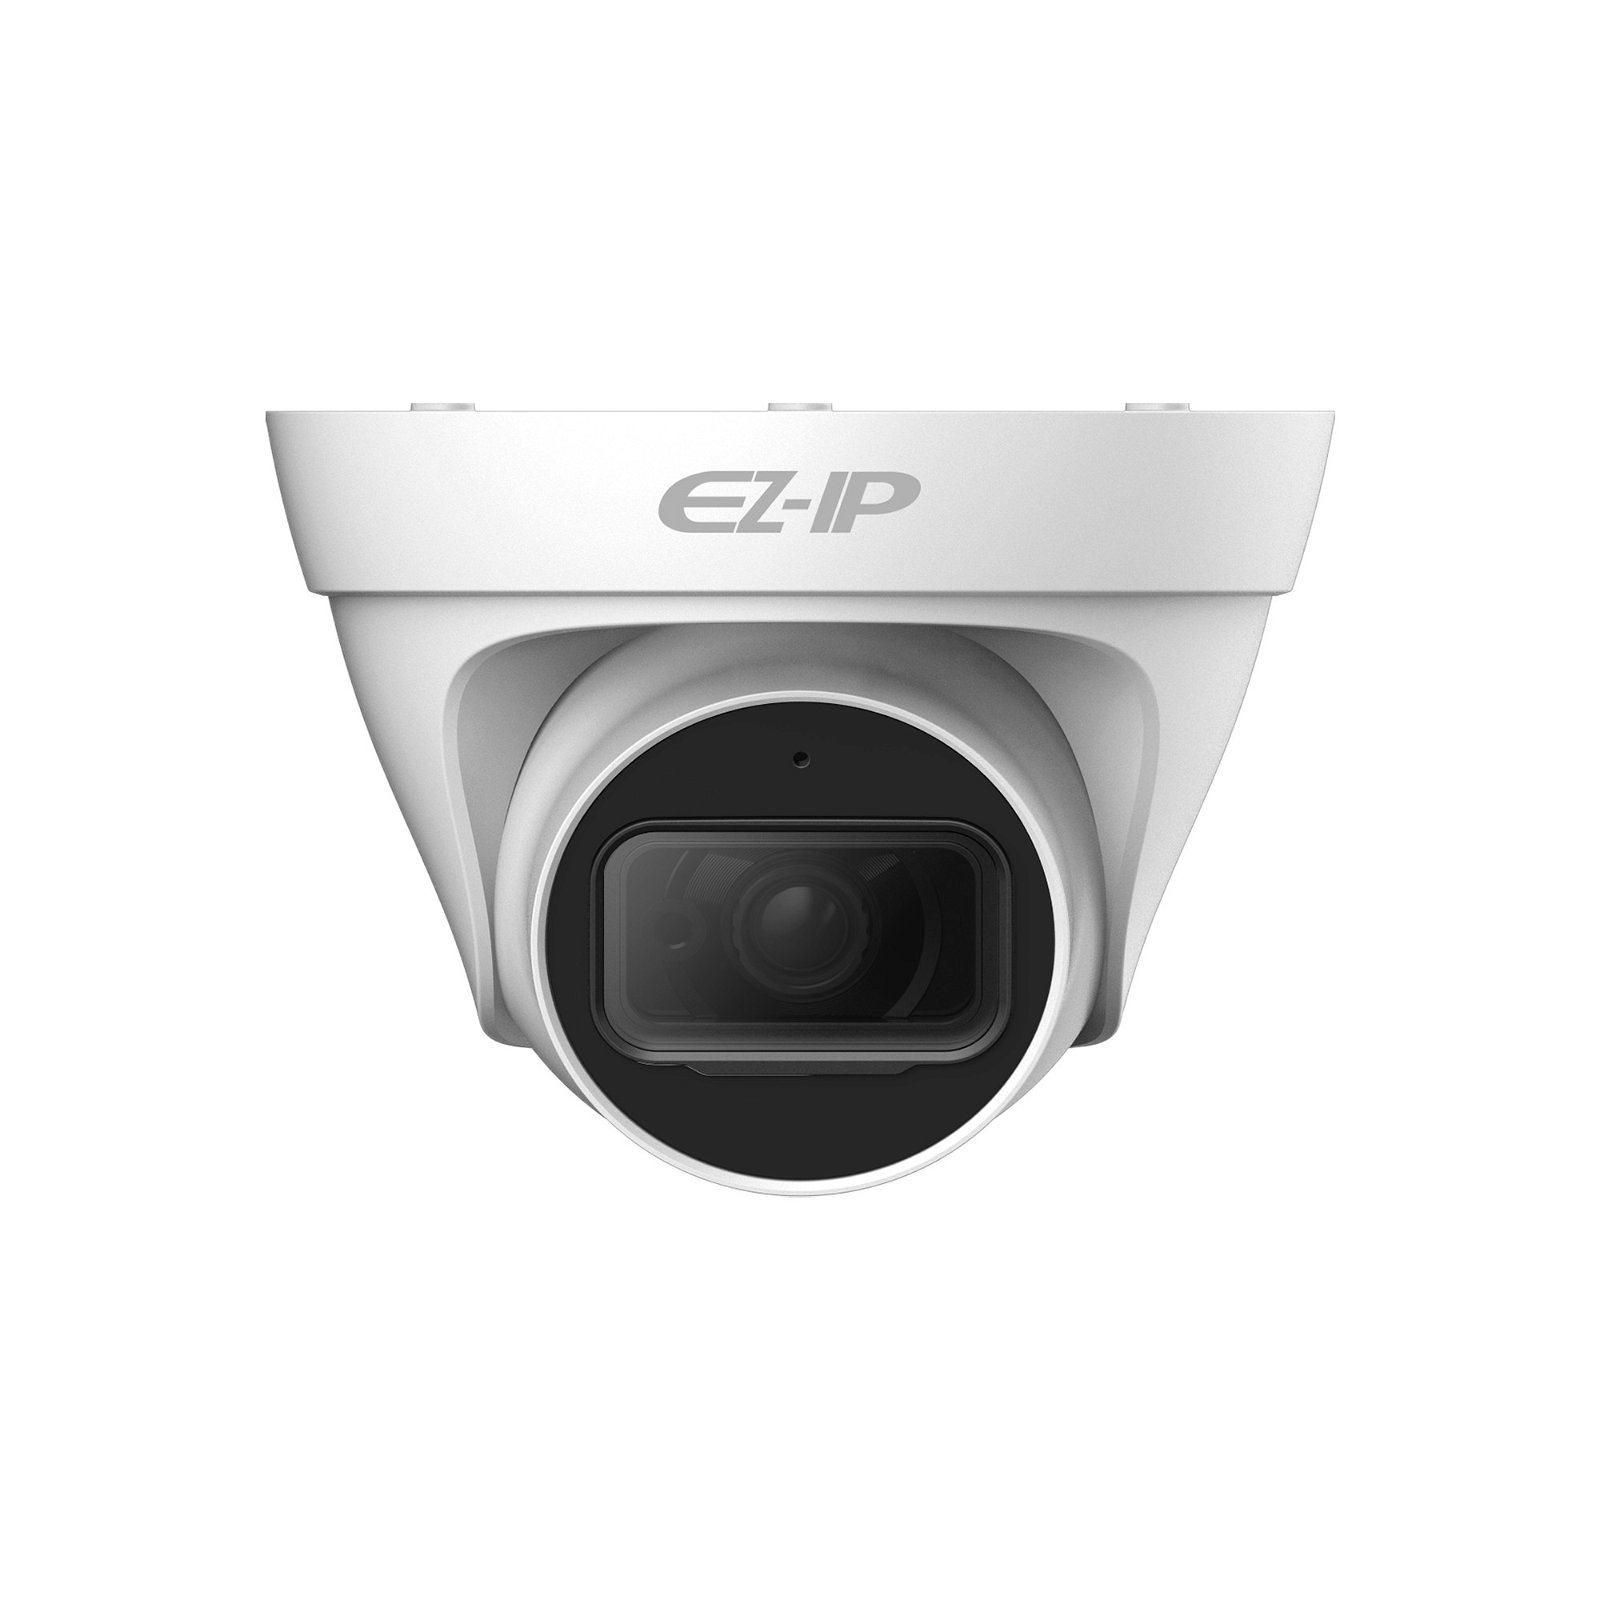 IP-Kamera Dahua EZ-IP 4 Mpx, 2,8 mm, PoE